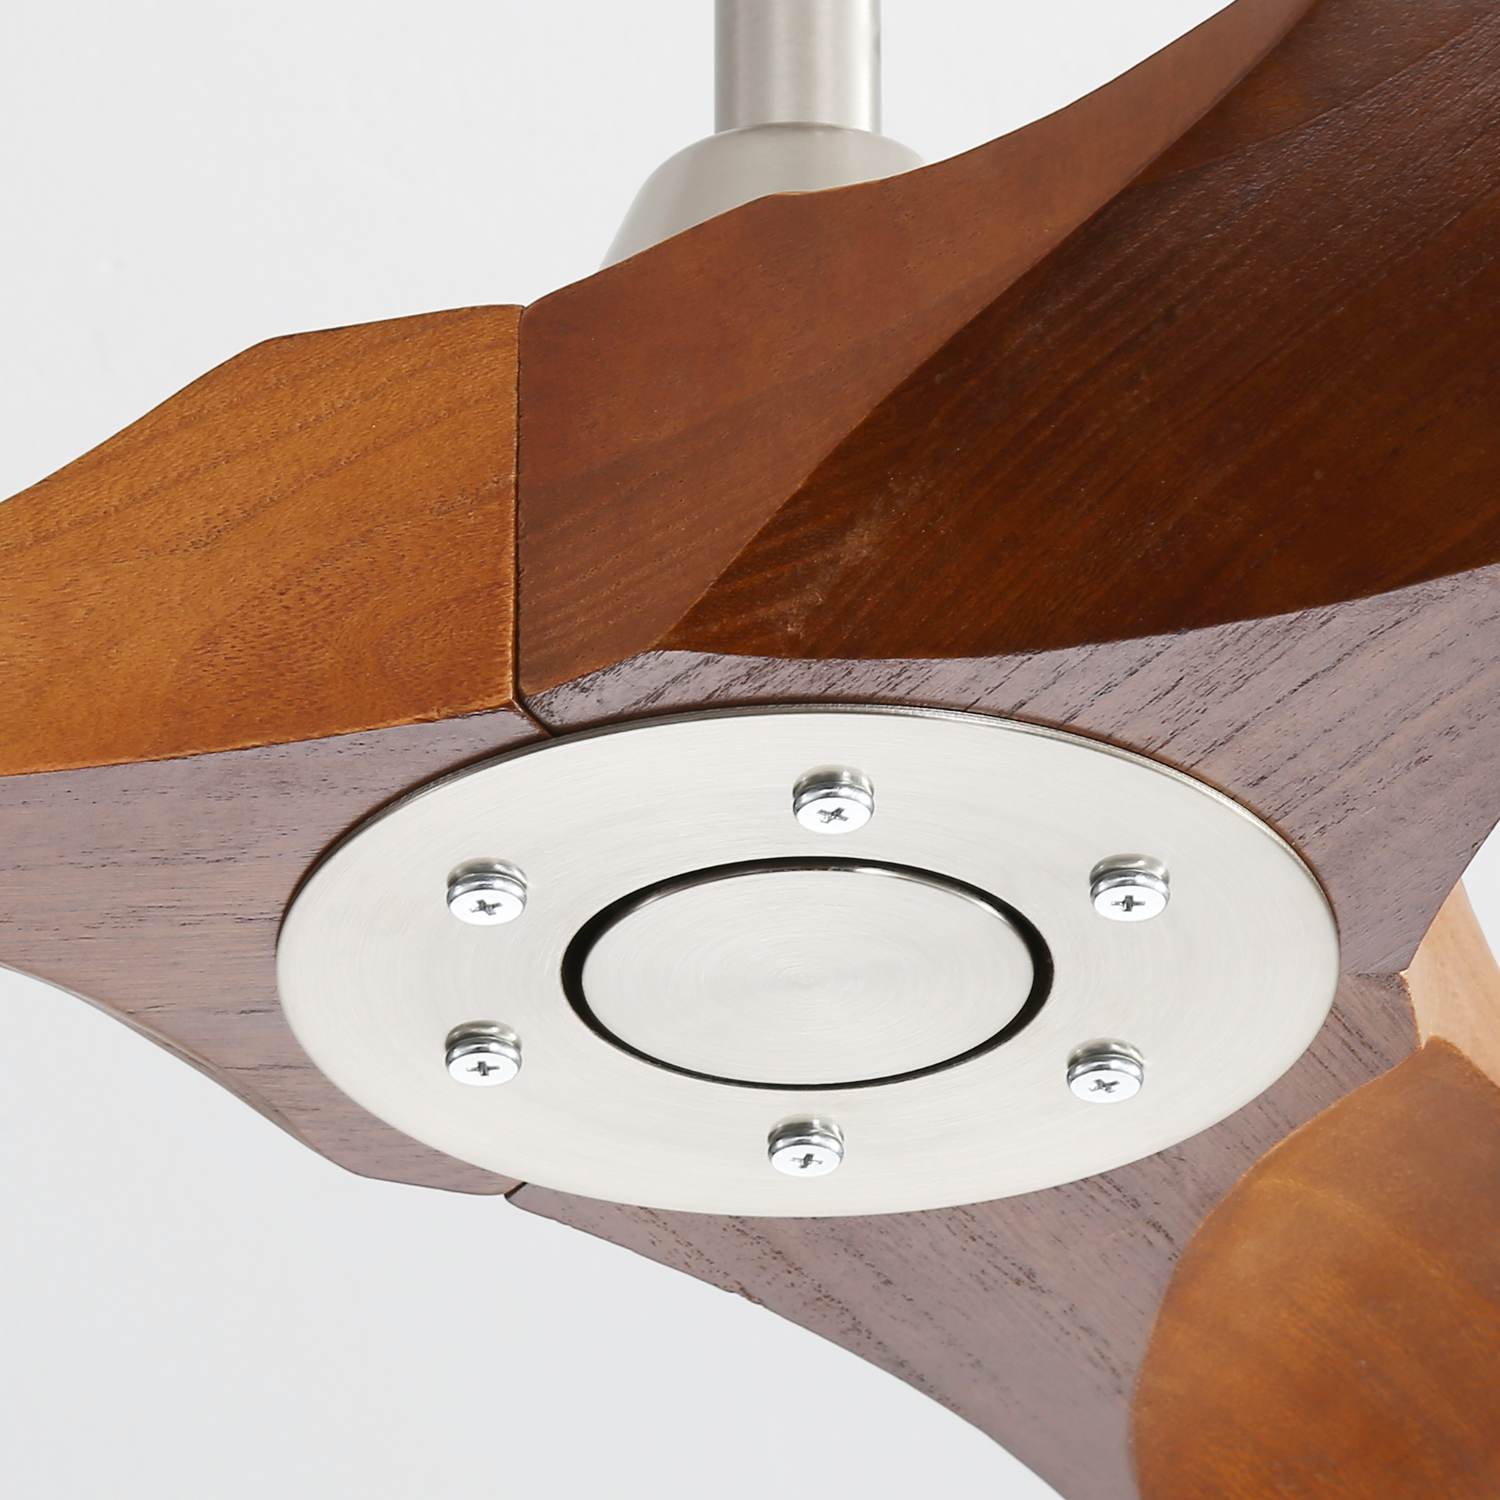 60 Inch Wood Blade Ceiling Fan with Remote - Brushed Nickel, Walnut Blades